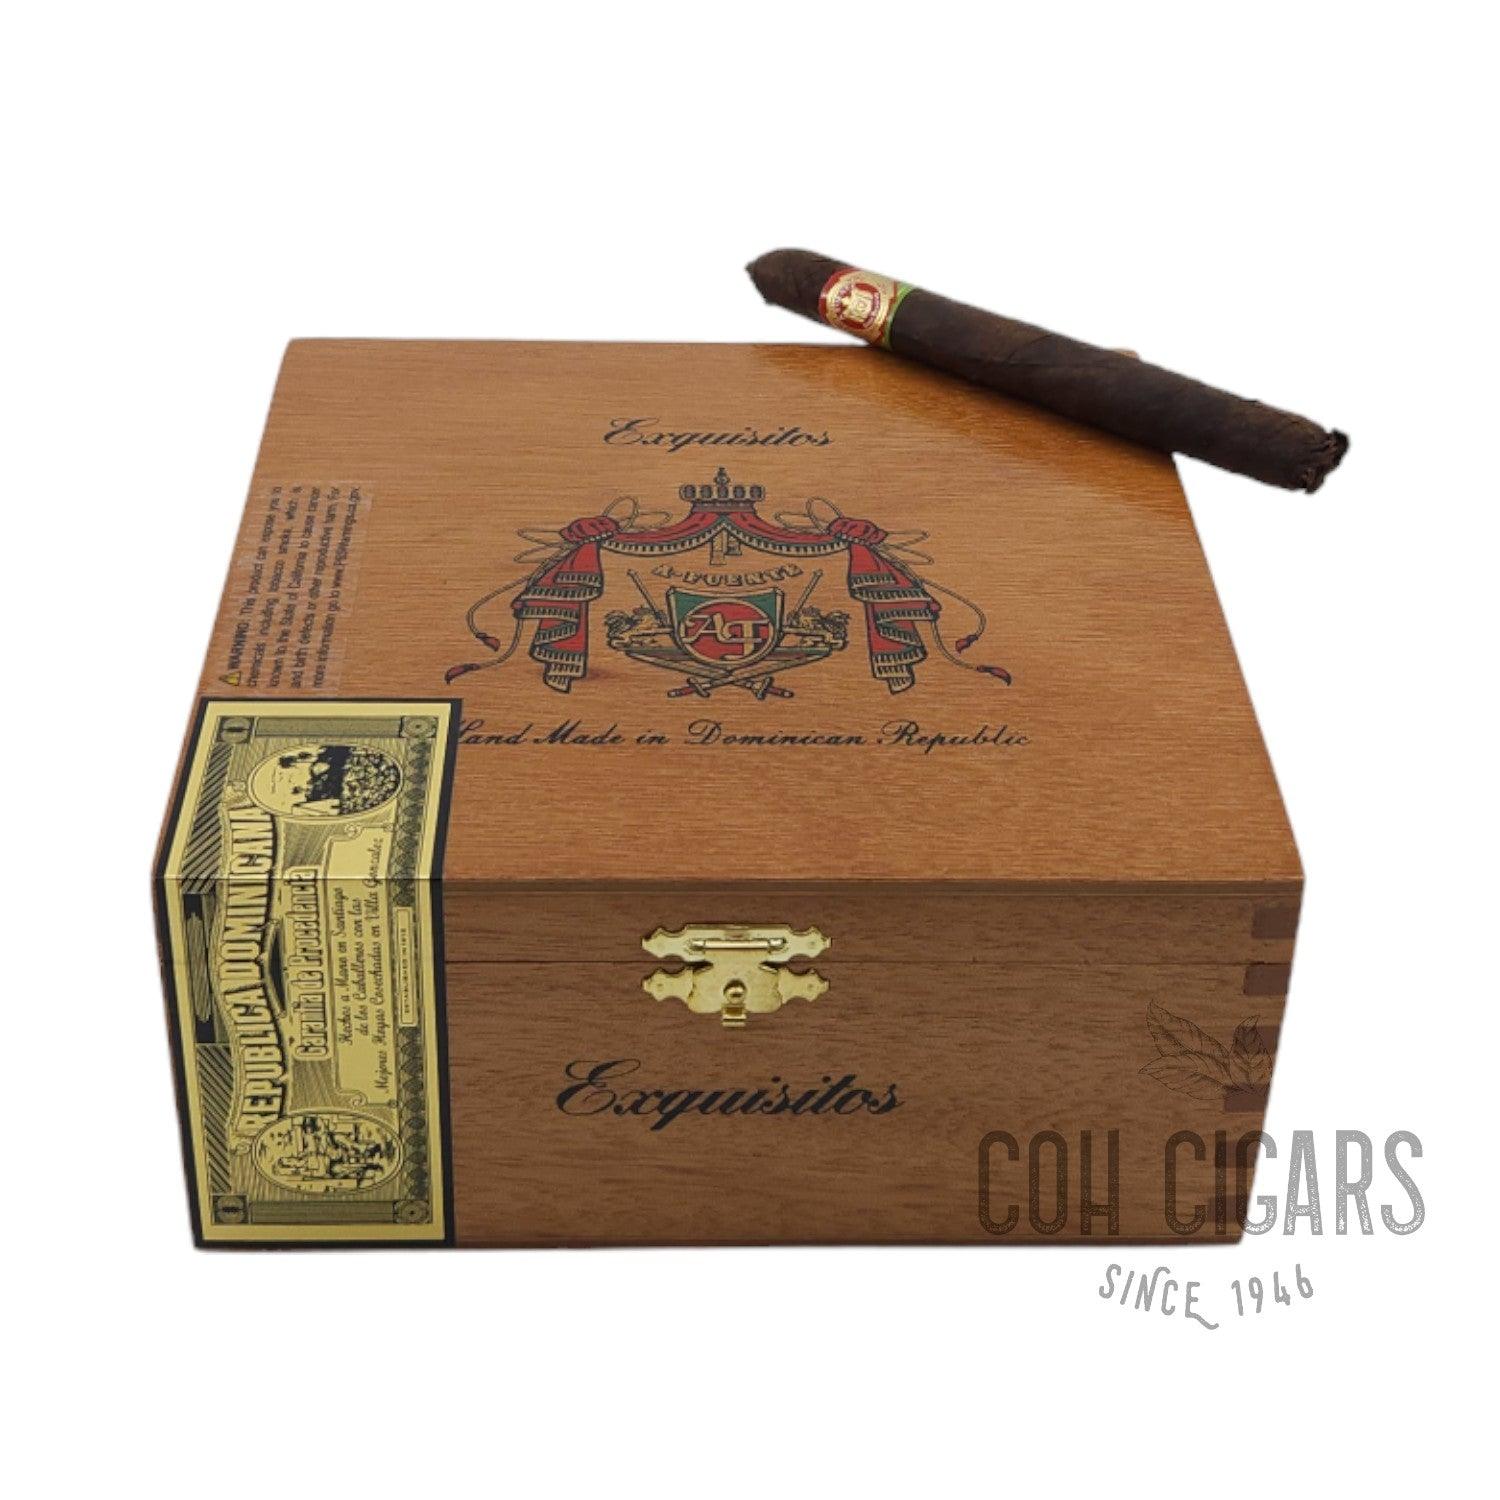 Arturo Fuente Cigar | Exquisitos Maduro | Box 50 - HK CohCigars